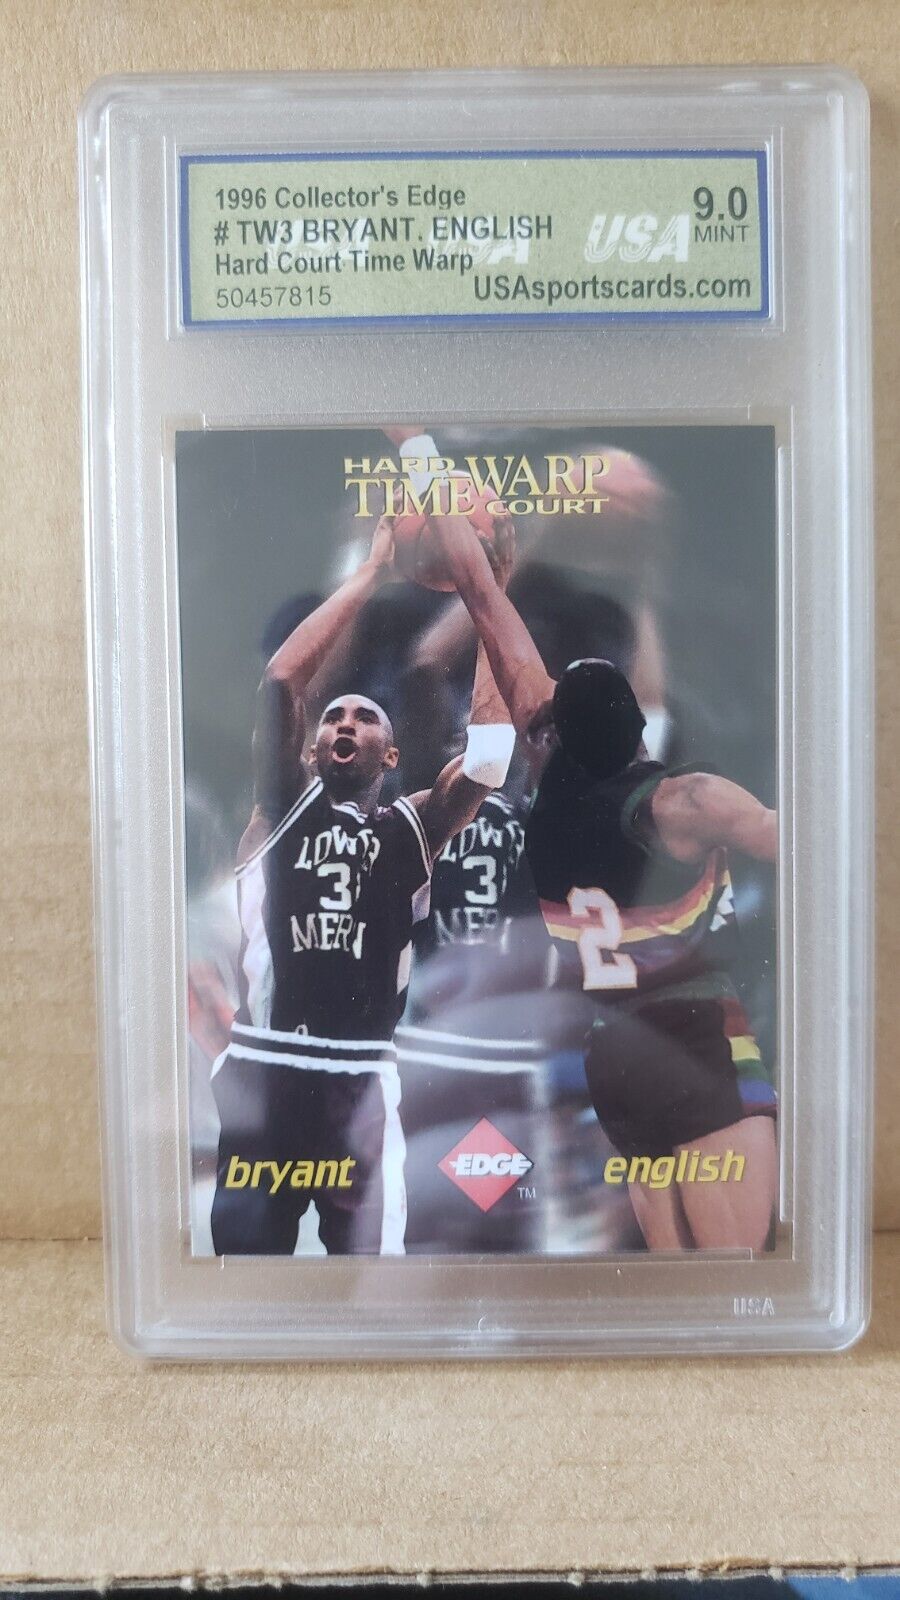 1996 Collector's Edge Time Warp Factory Kobe Bryant Alex English Card USA 9 Mint